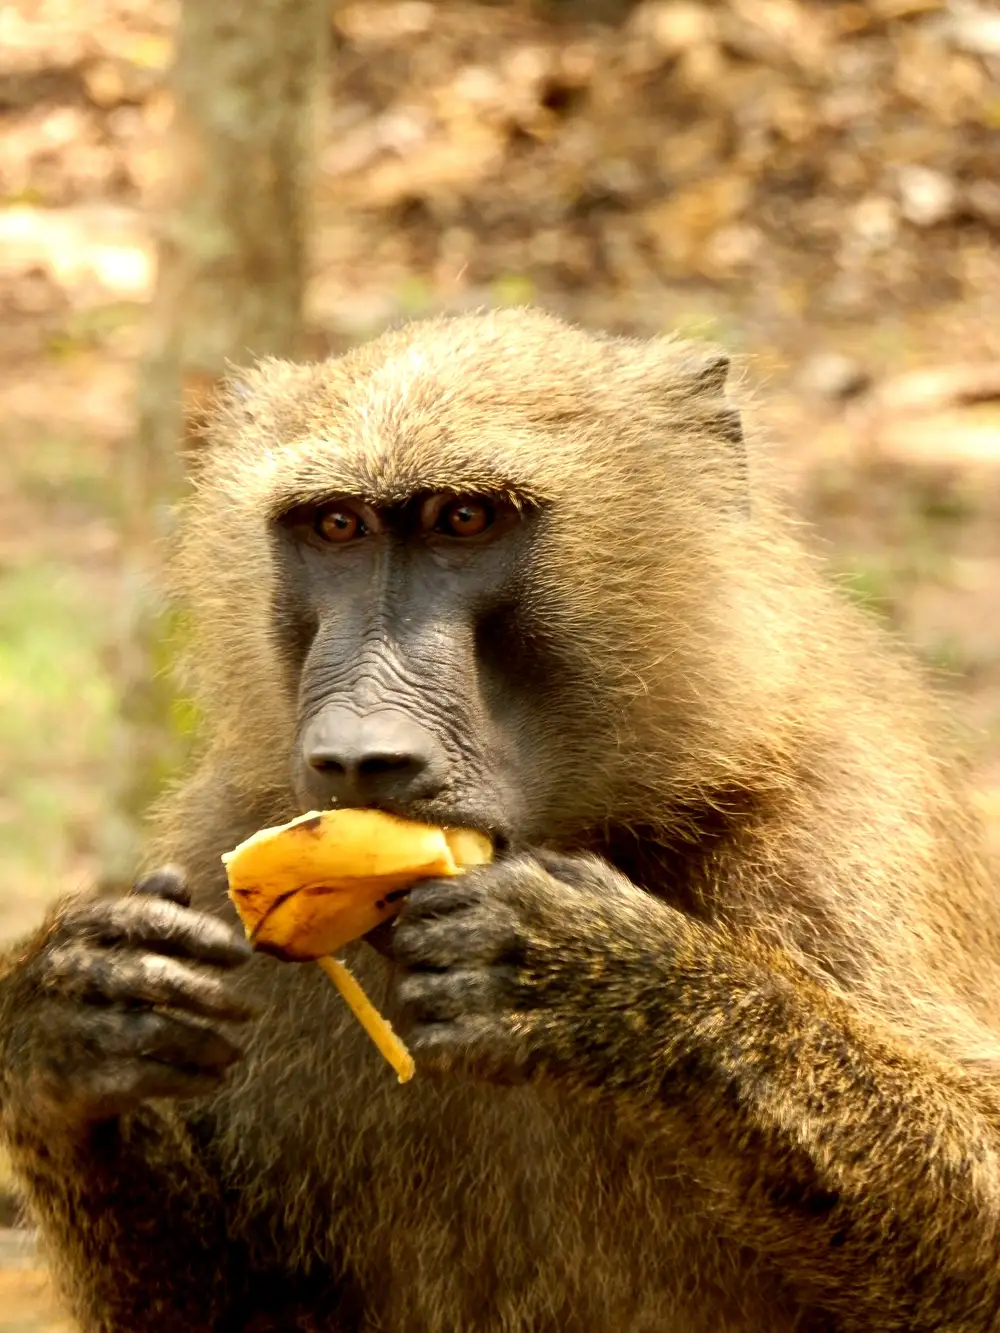 A baboon eating banana